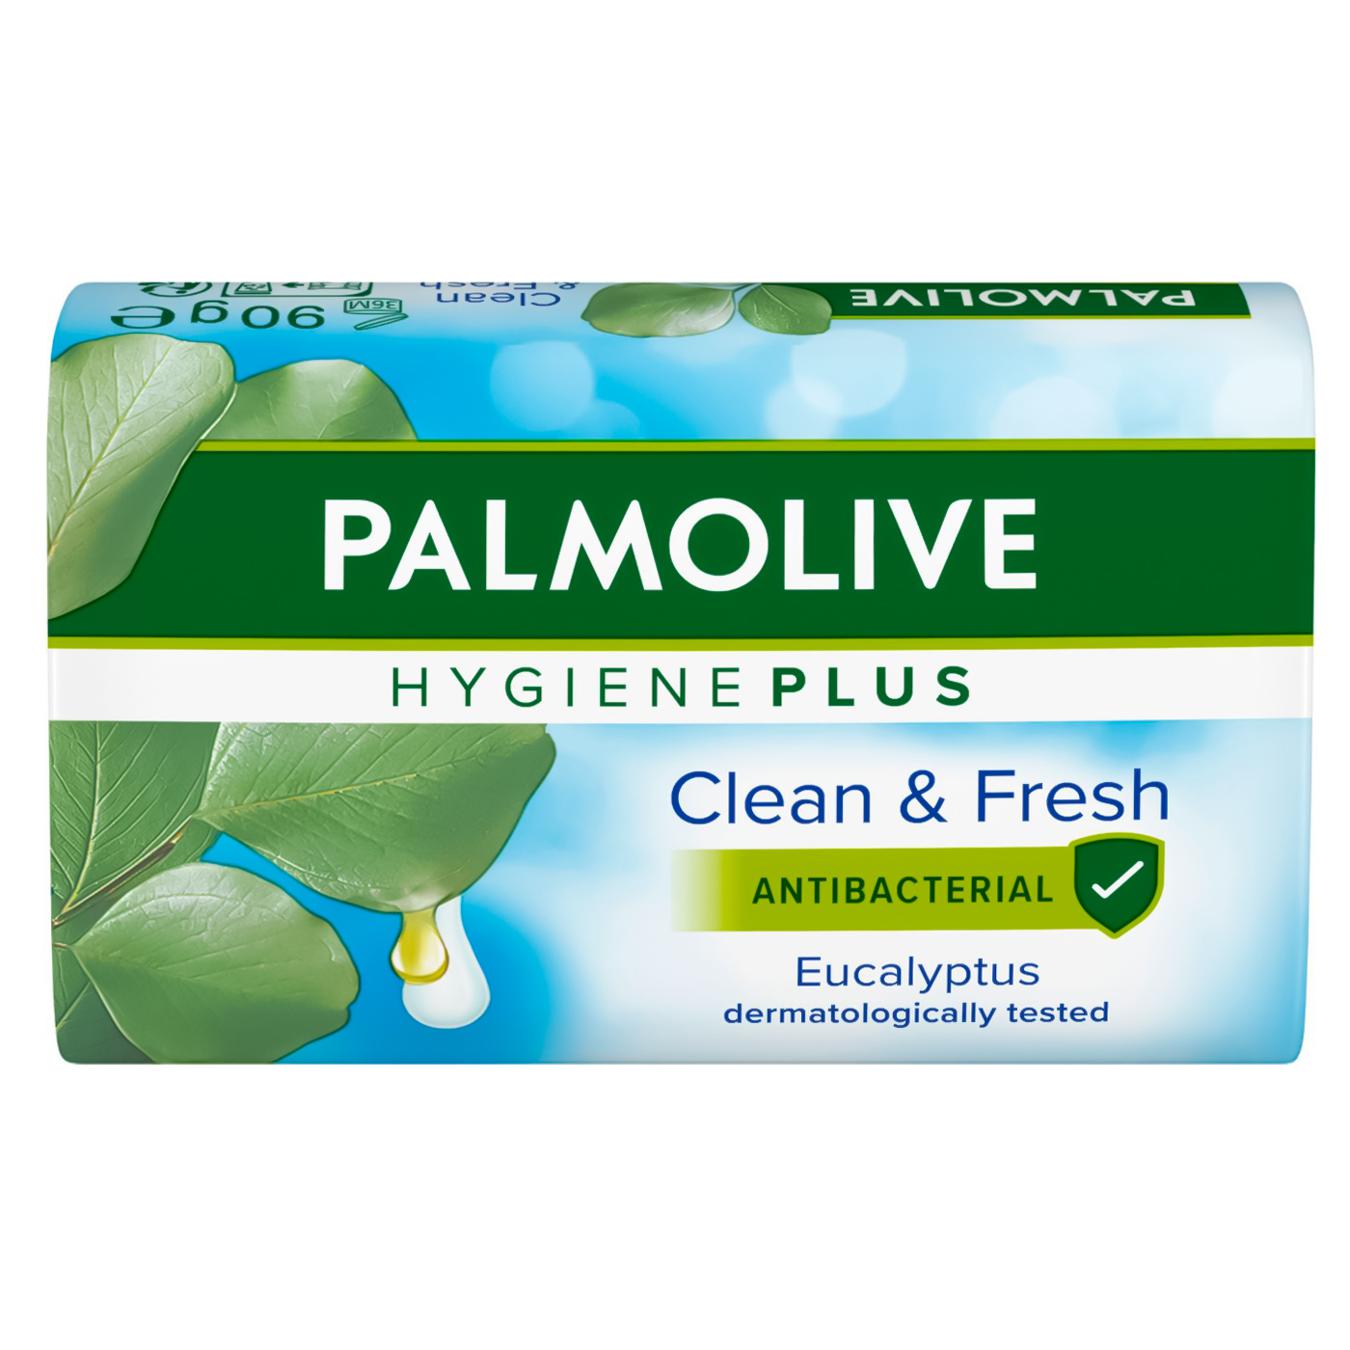 Soap Palmolive hygiene plus eucalyptus 90g